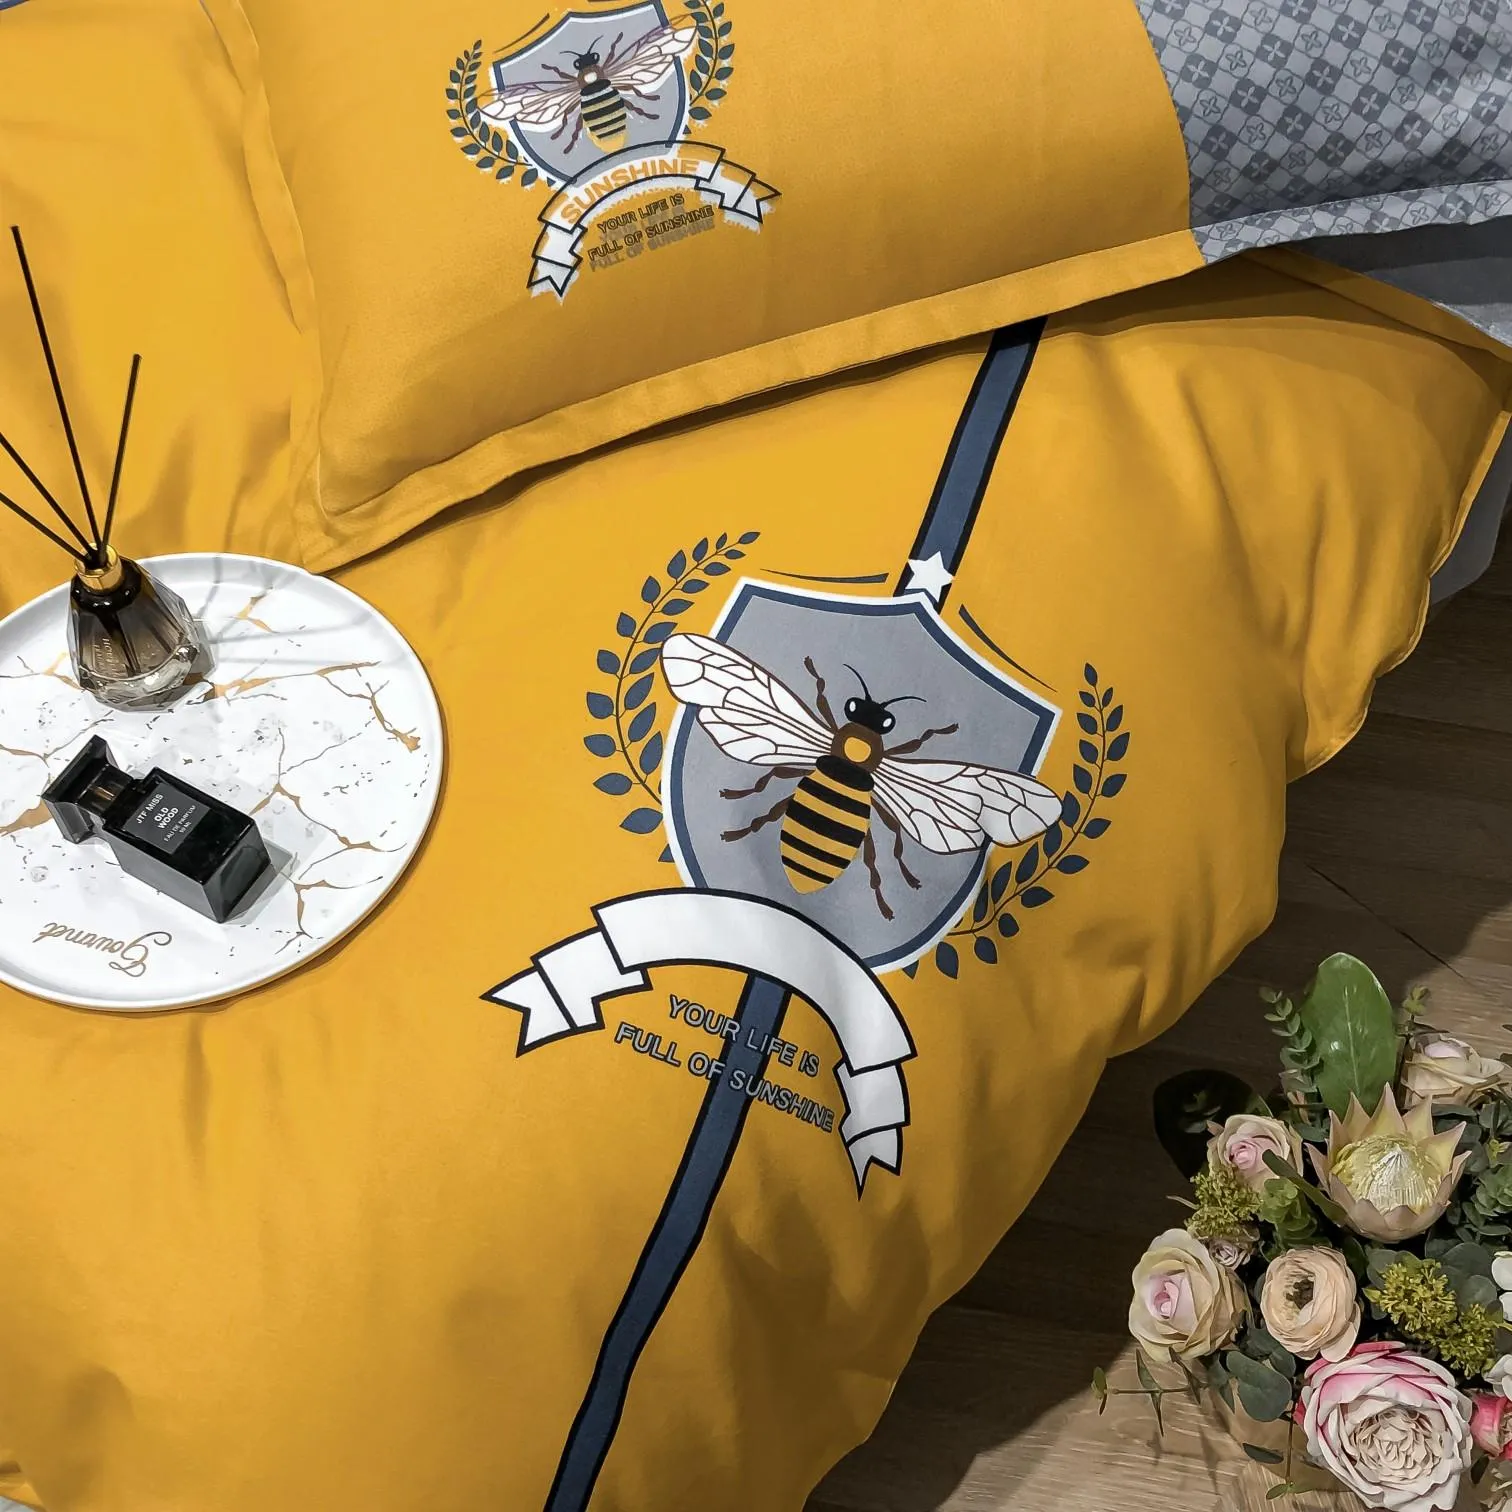 Moderne Designer -Bettwäsche -Sets Cover Mode hochwertige Baumwolle Queen Size Xury Bettlaken Bettdecke 7872168